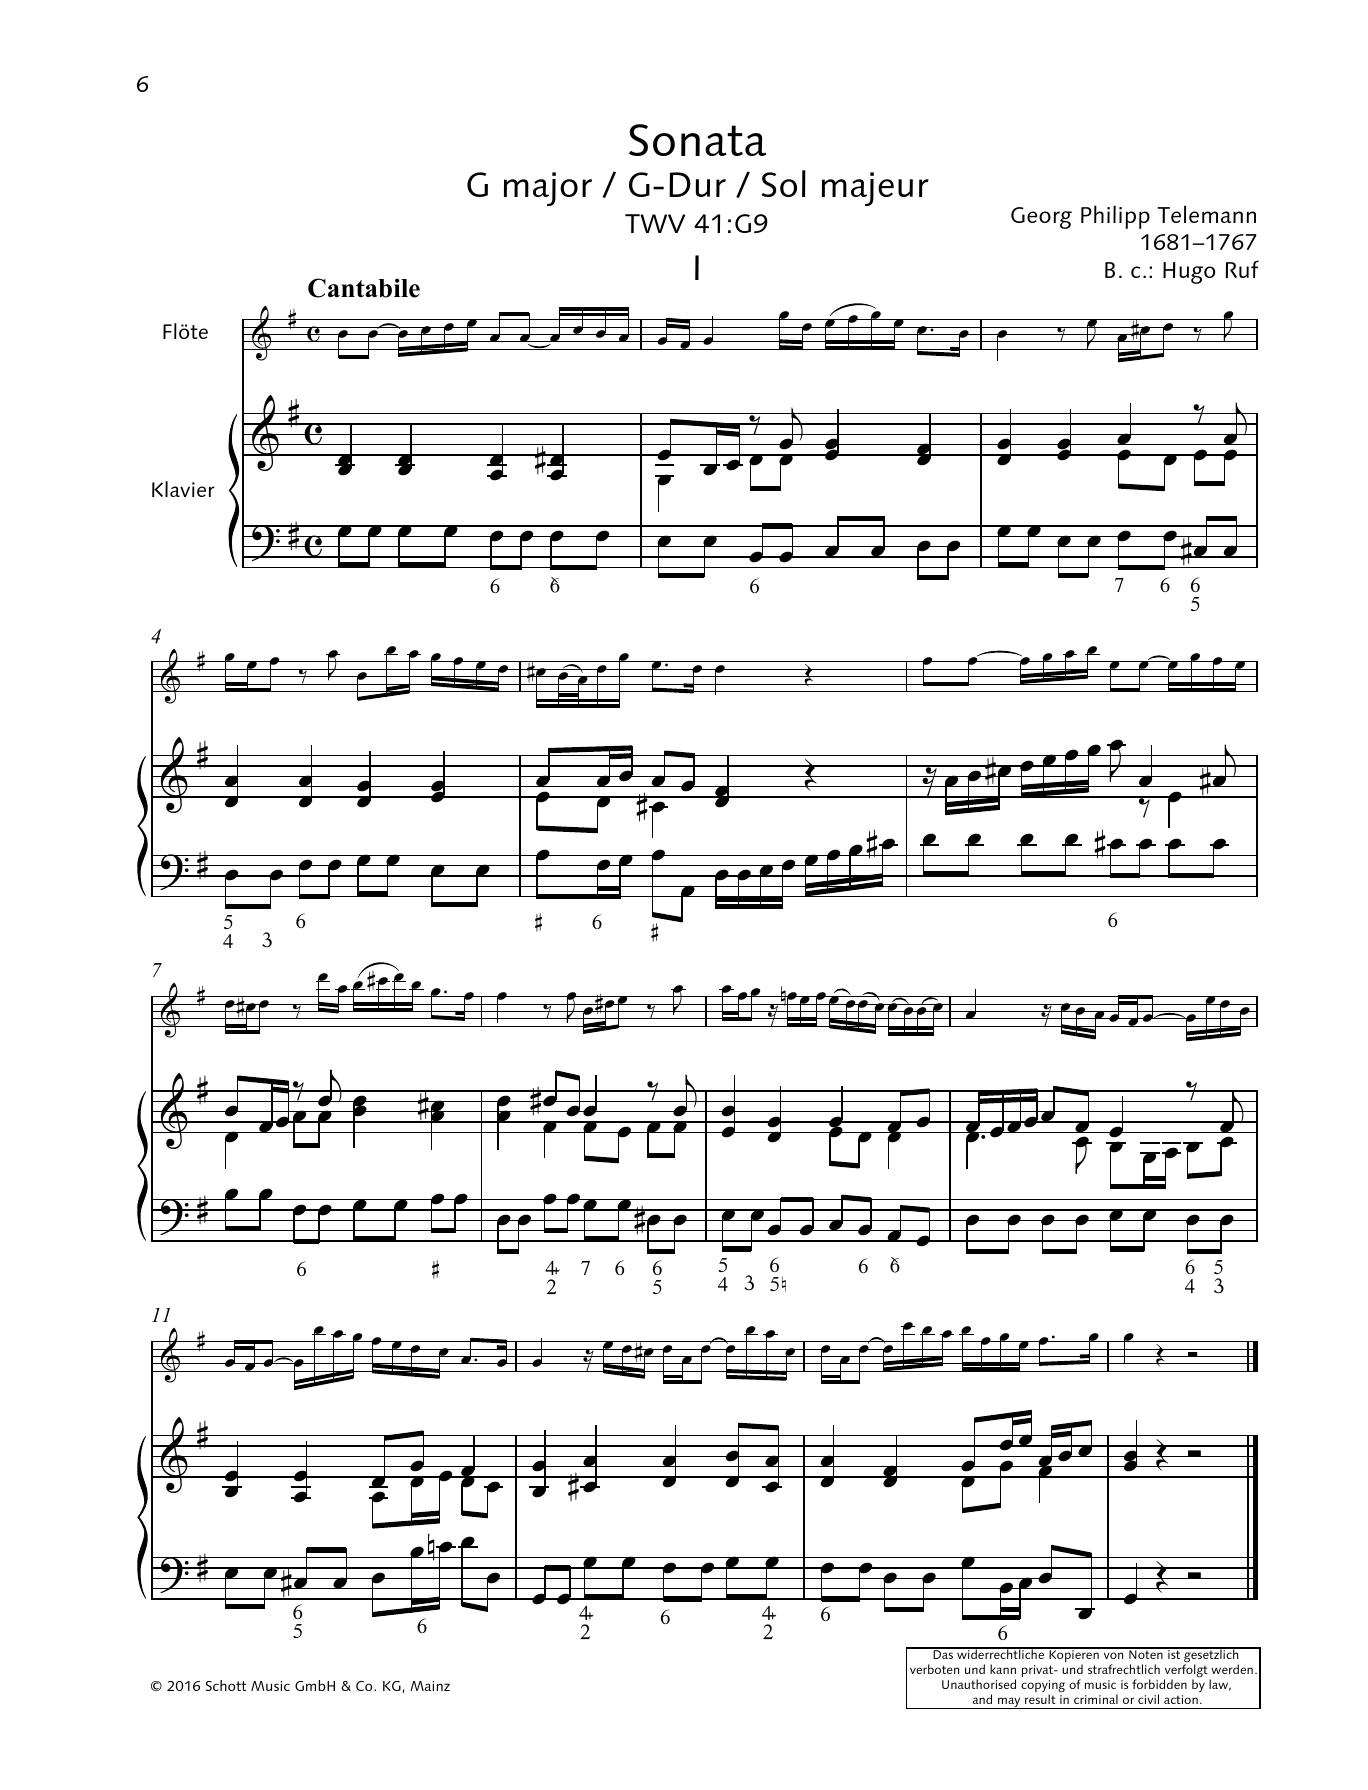 Sonata G Major sheet music